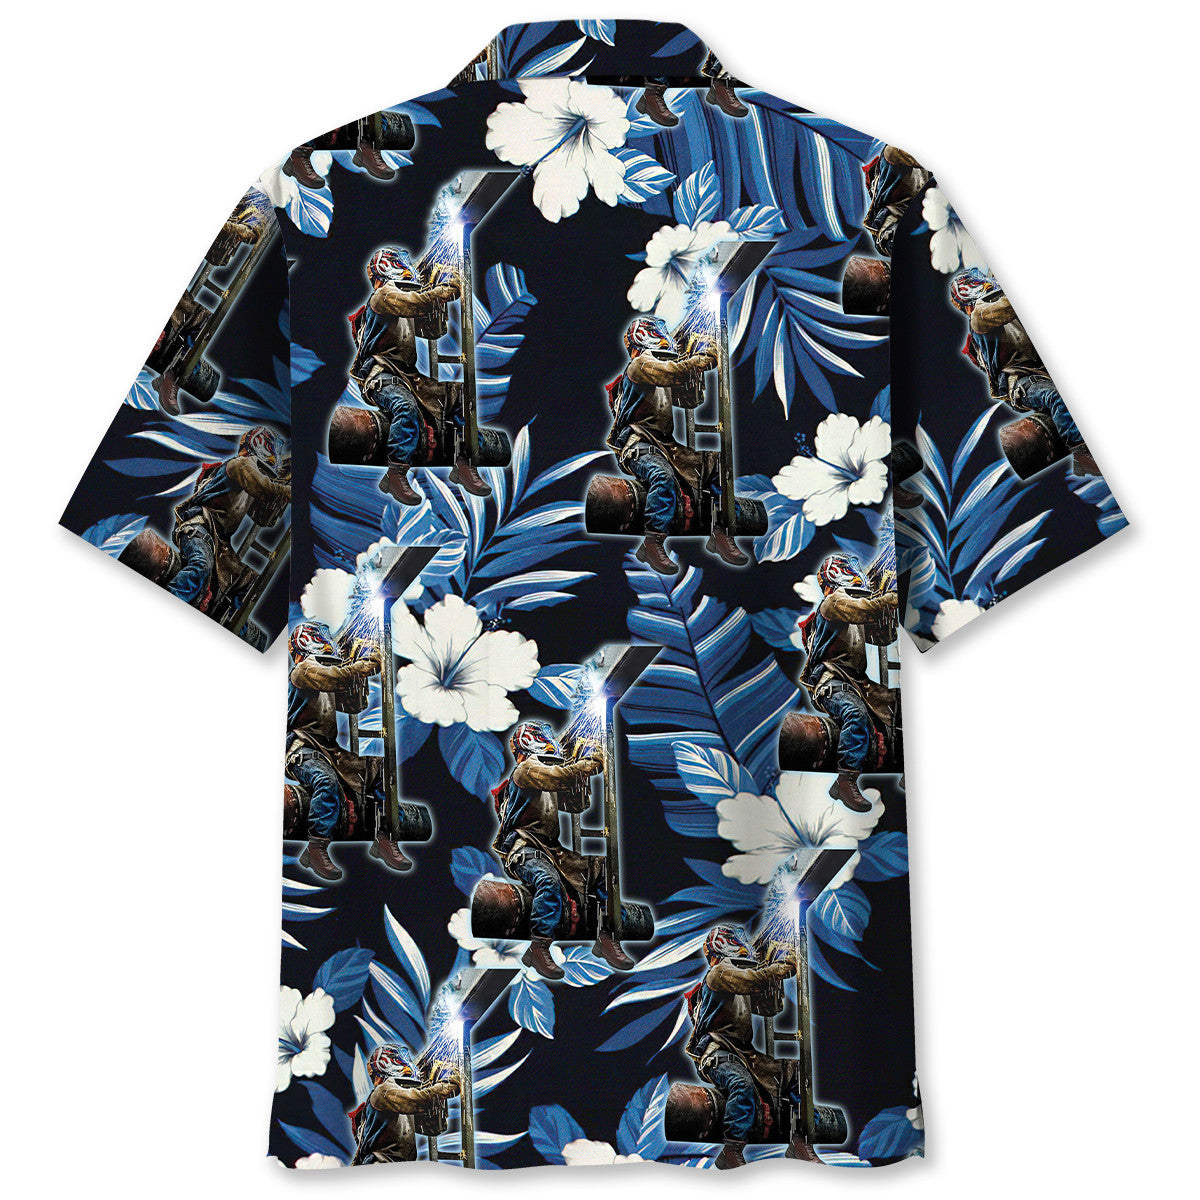 Welder Proud Hawaiian Shirt